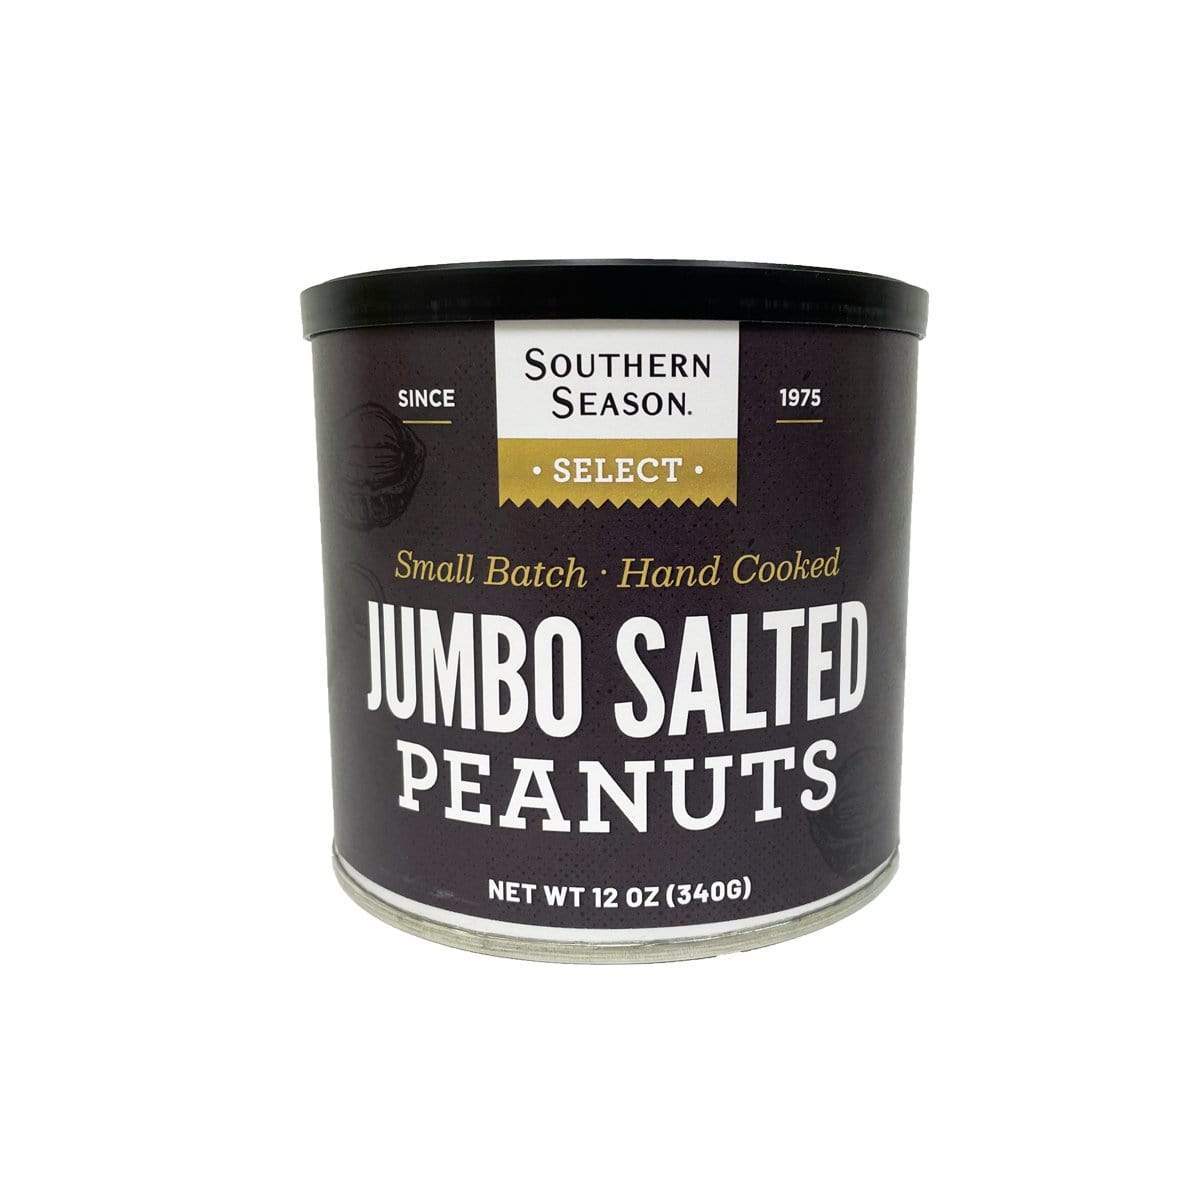 Southern Season Southern Season Select Hand Cooked Jumbo Salted Peanuts